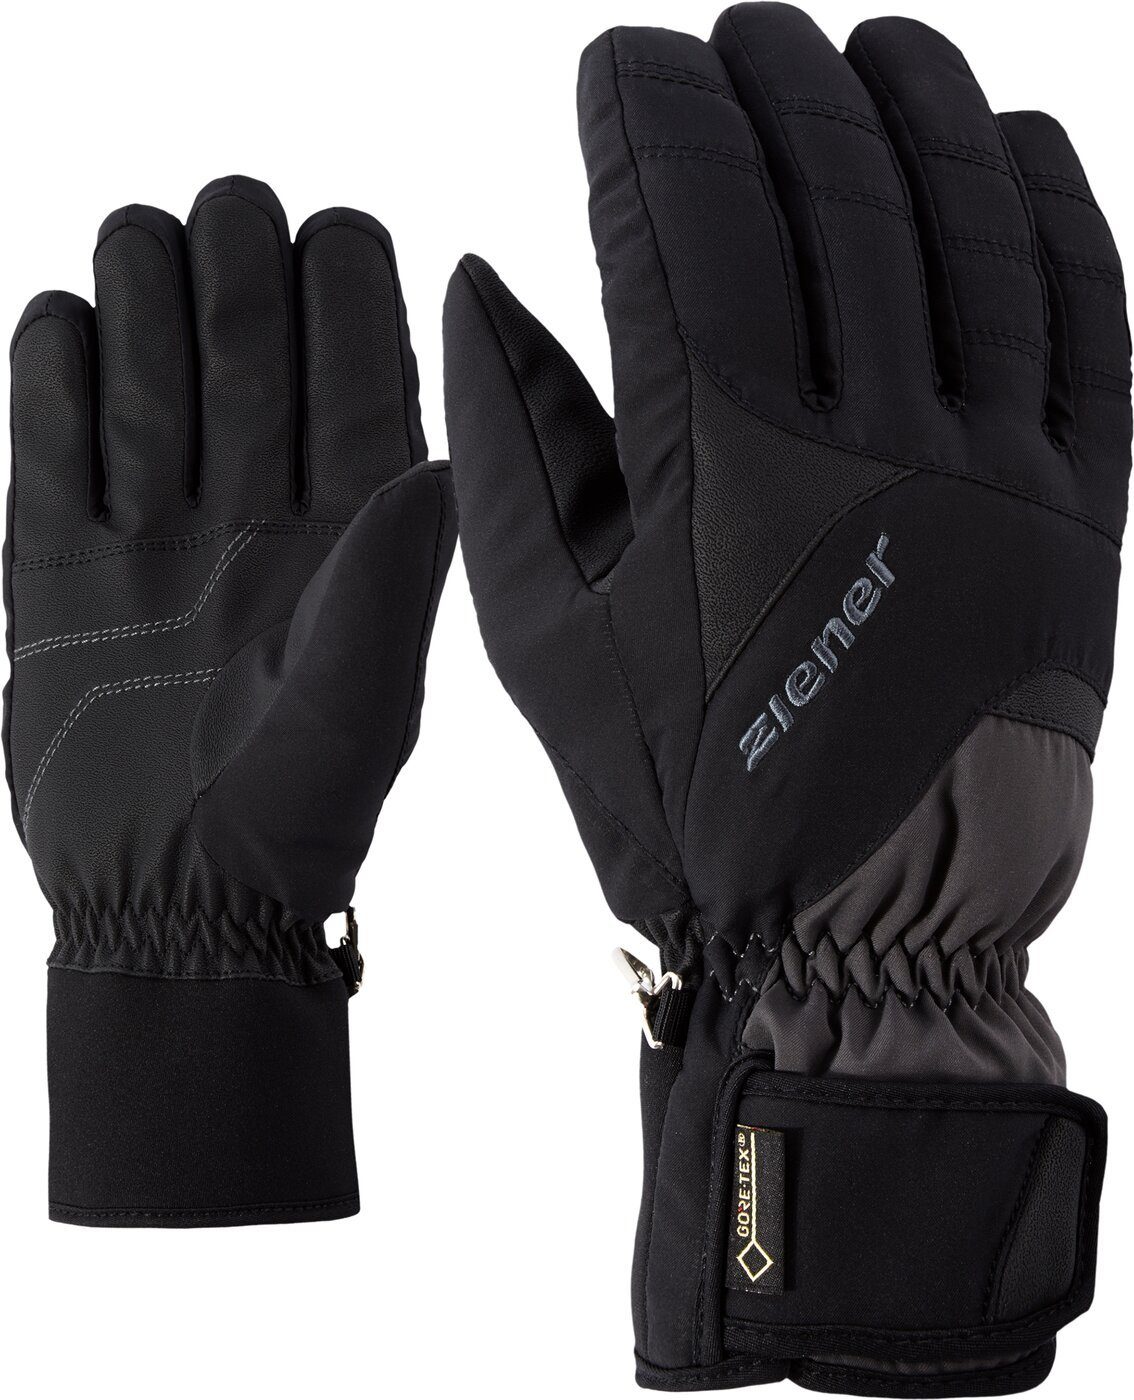 Ziener 1512 GTX alpine ski Fleecehandschuhe glove GUFFERT graphite/black